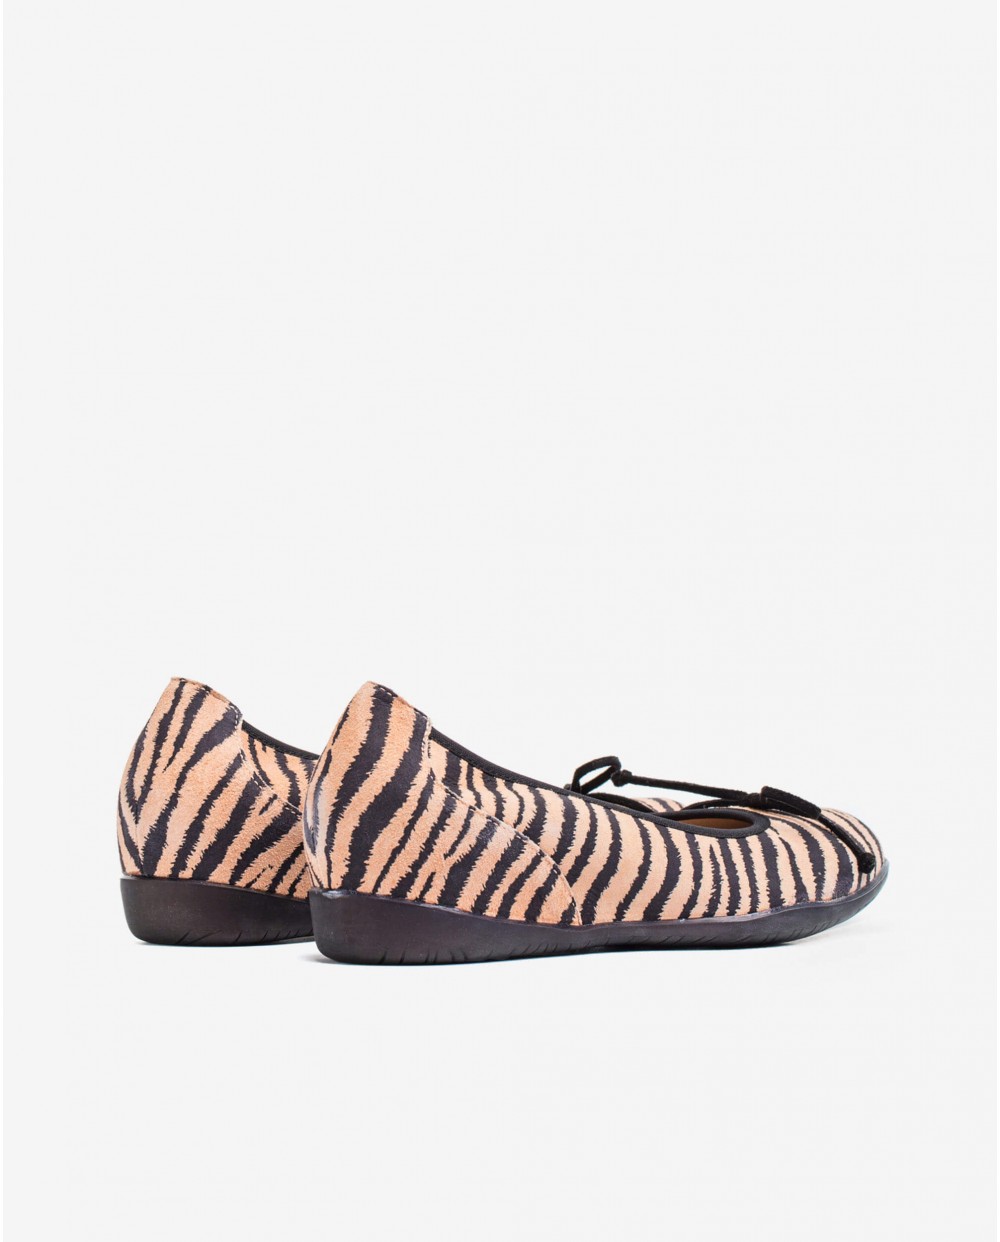 Wonders-Flat Shoes-Zebra print ballet pump with bow detail